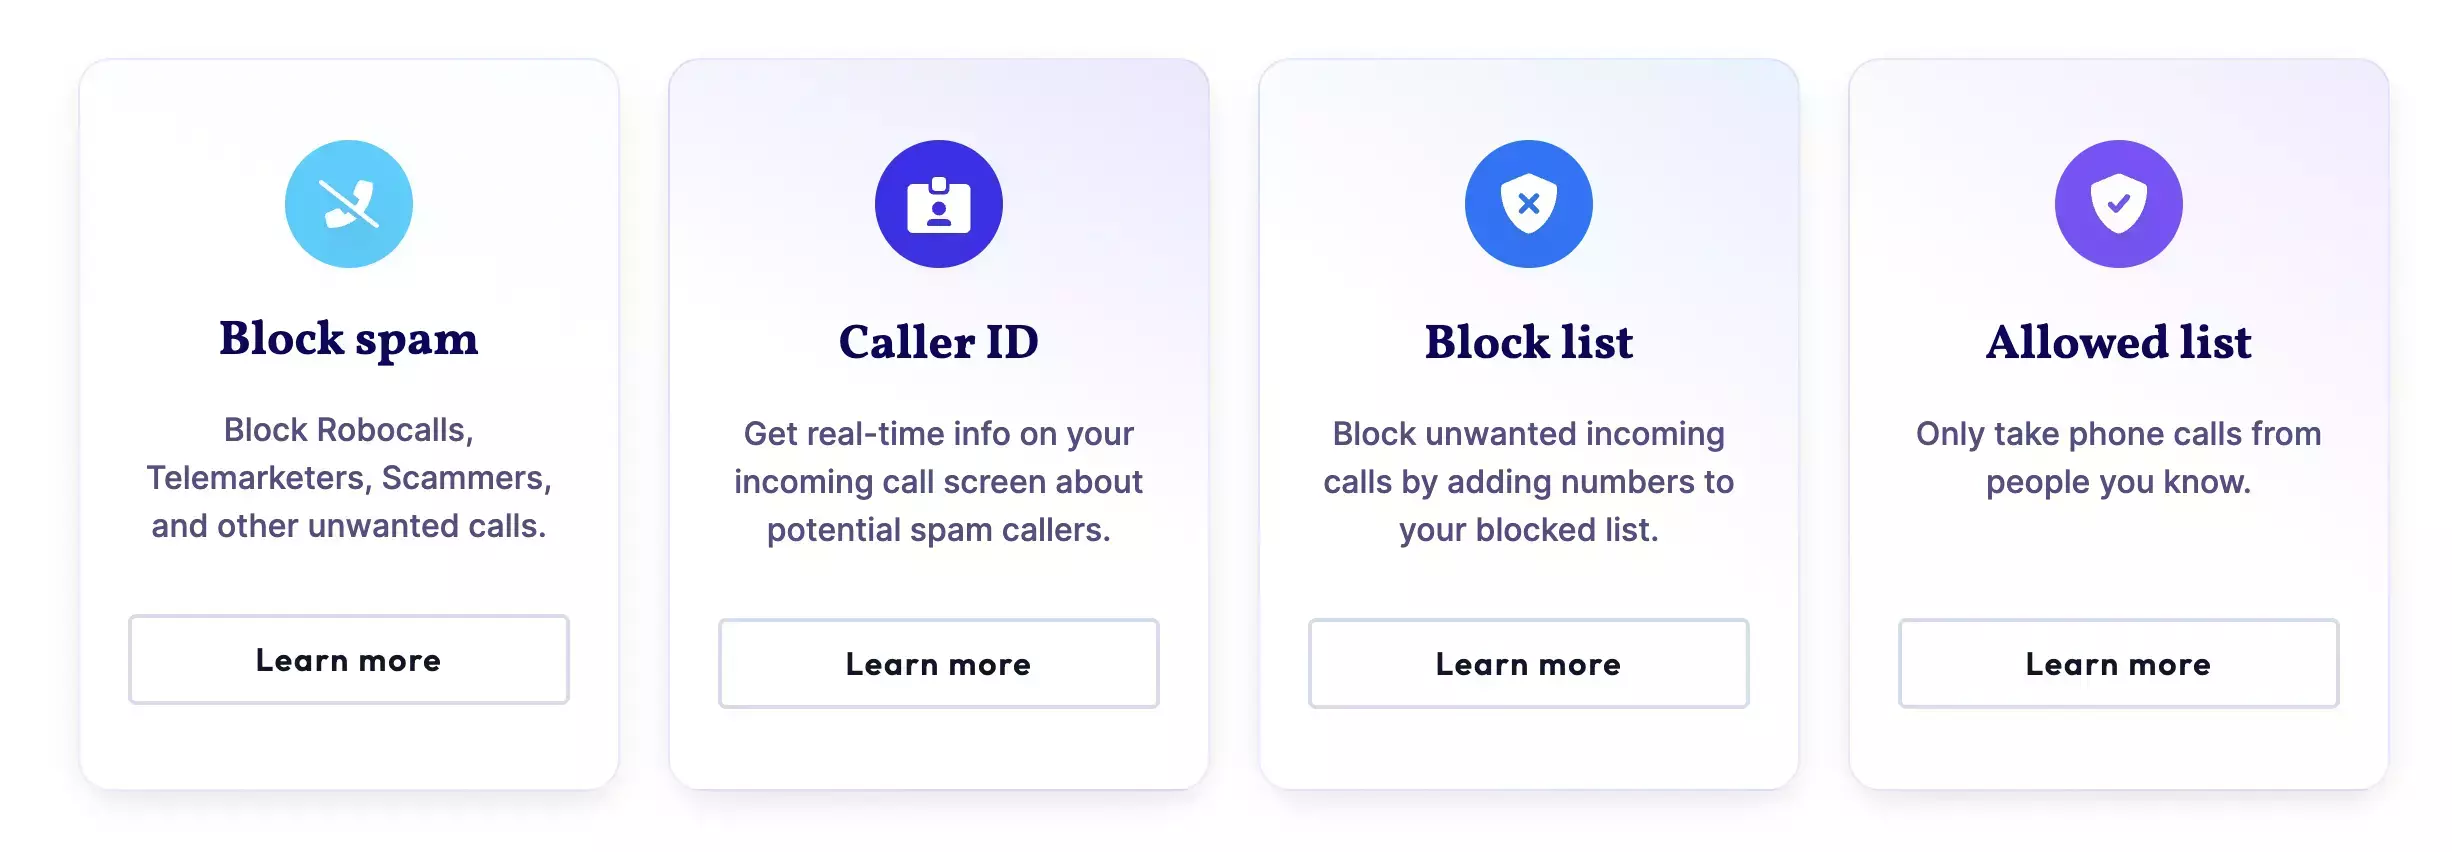 An image of Community Phone landline spam call blocker features